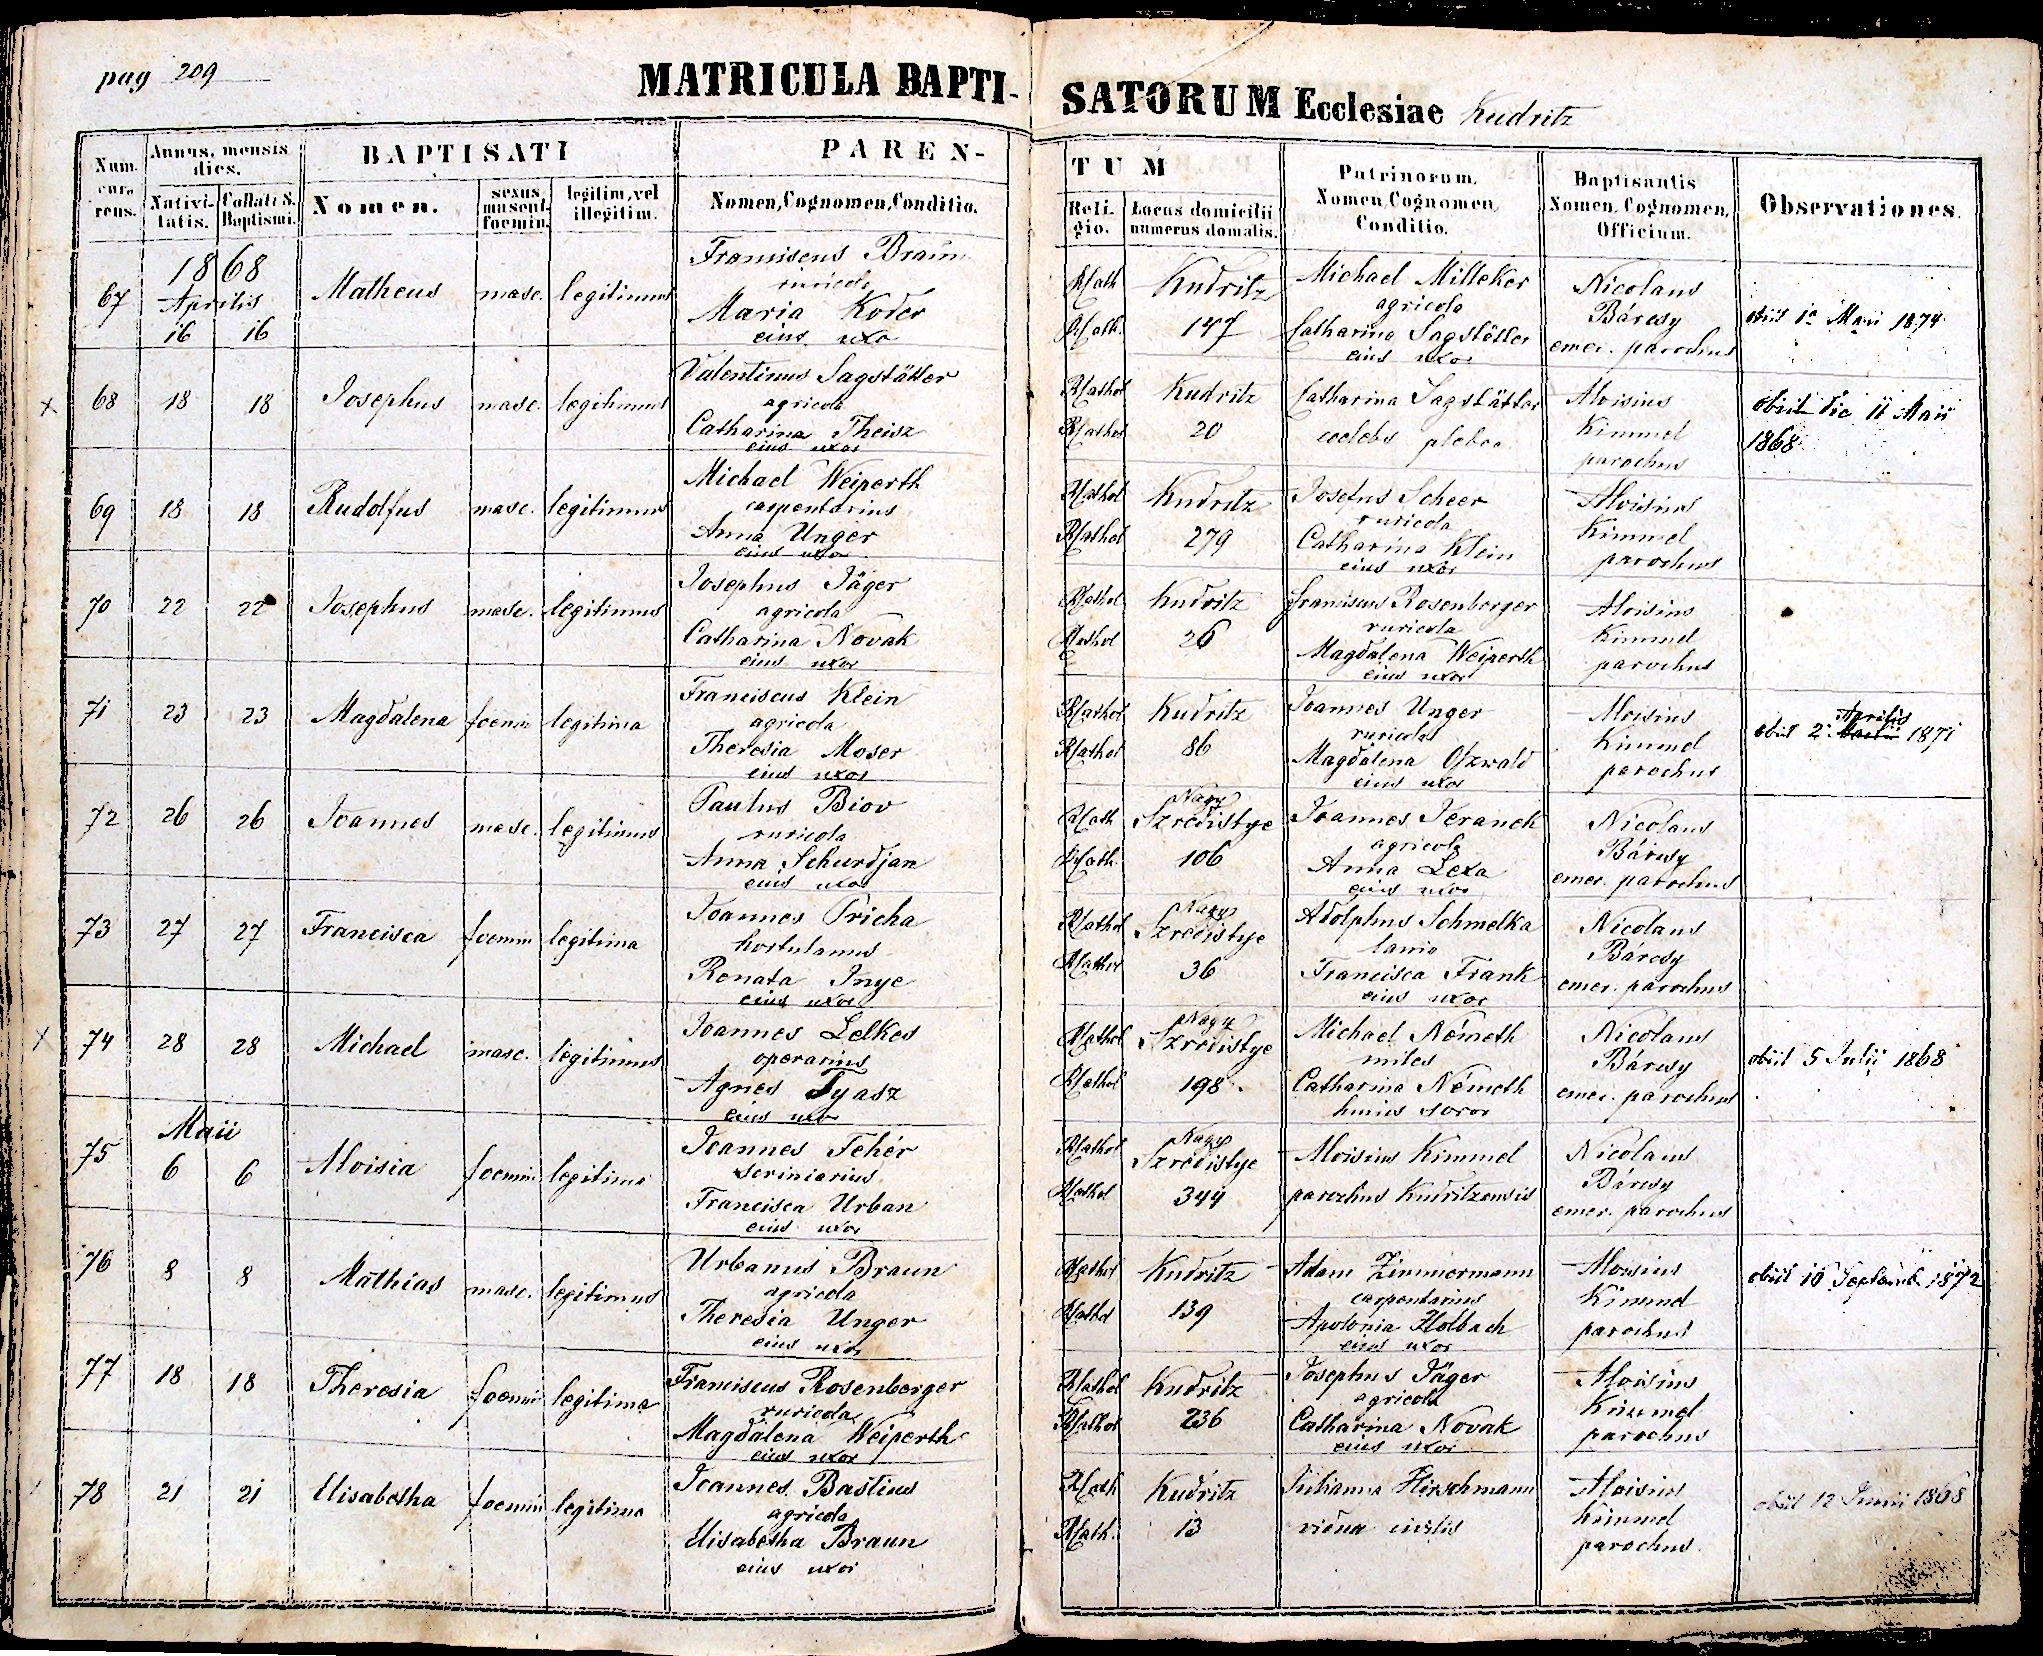 images/church_records/BIRTHS/1852-1870B/209